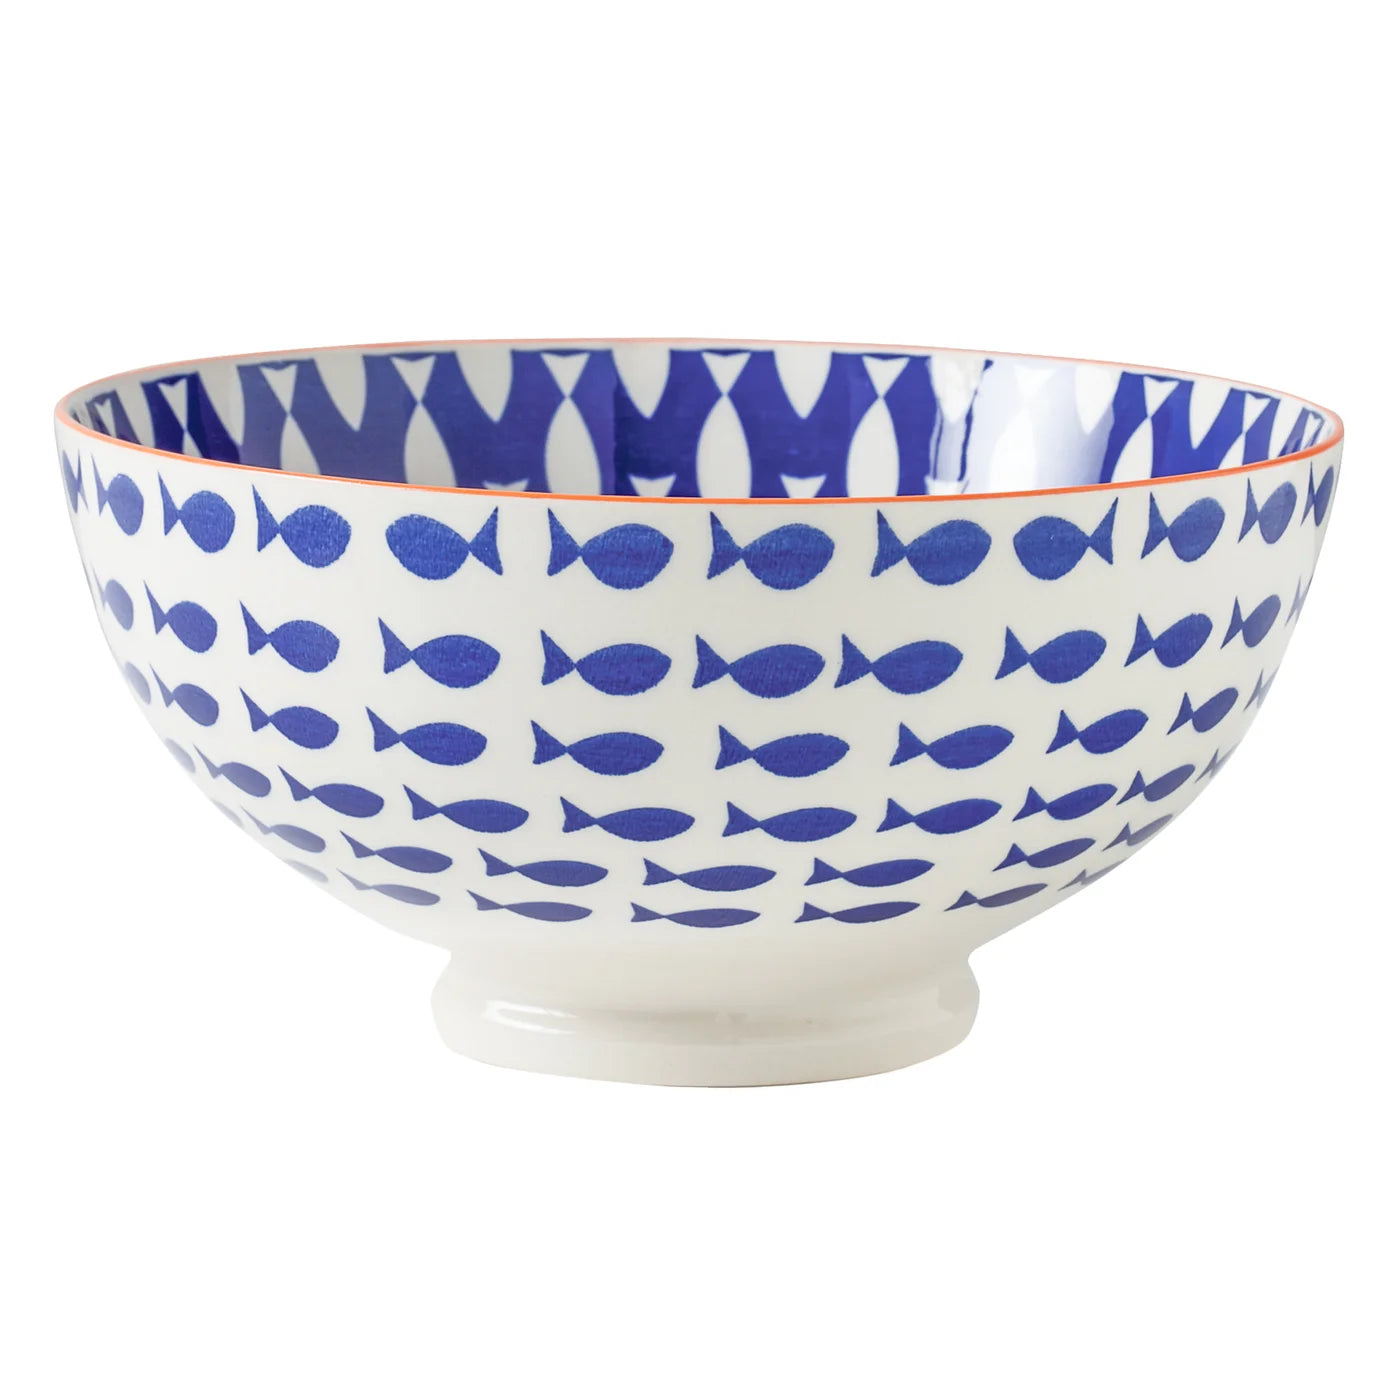 TORRE & TAGUS Kiri Porcelain Bowl - Fish, 56 oz